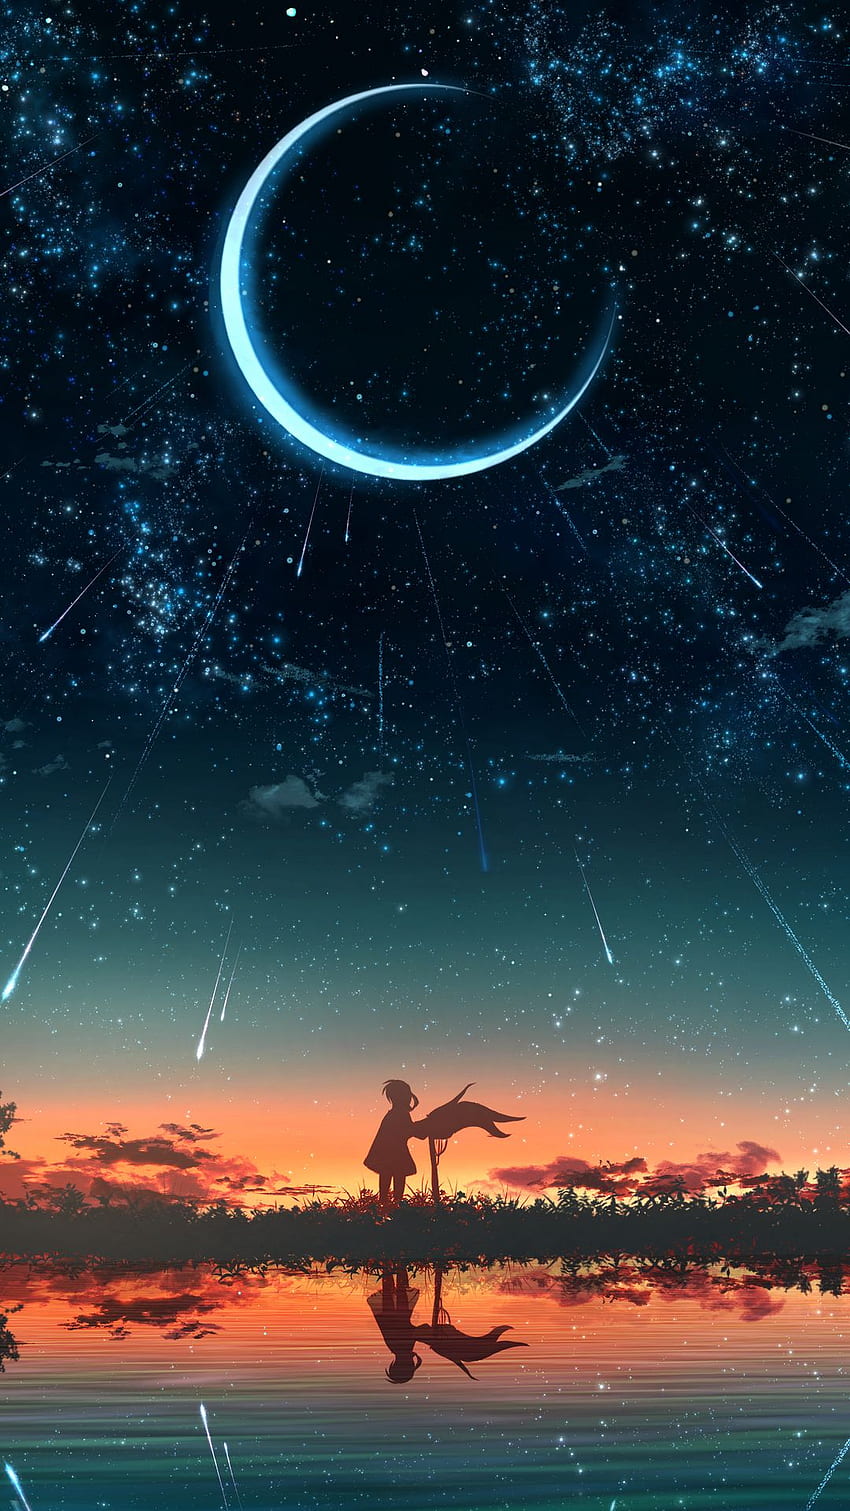 100+] Anime Night Sky Wallpapers | Wallpapers.com